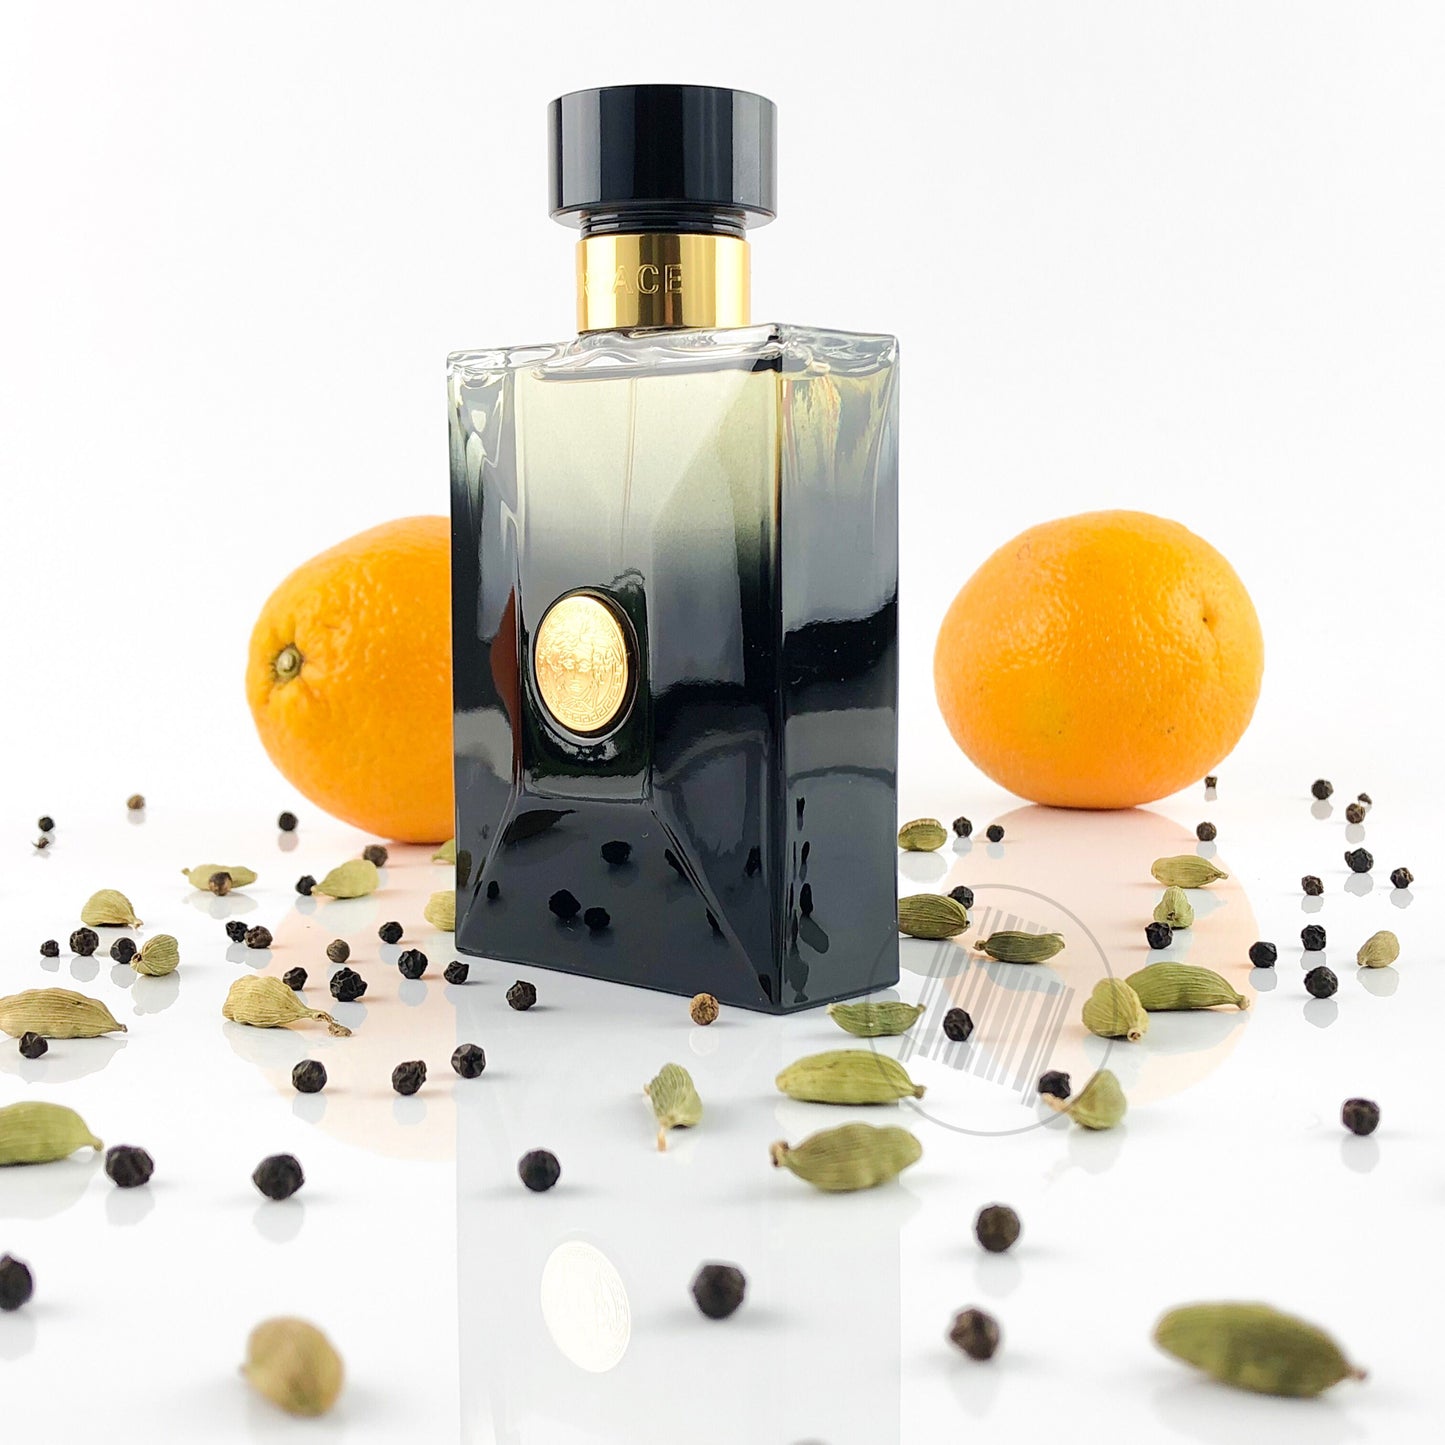 Versace Oud Noir EDP for men - Perfume Planet 